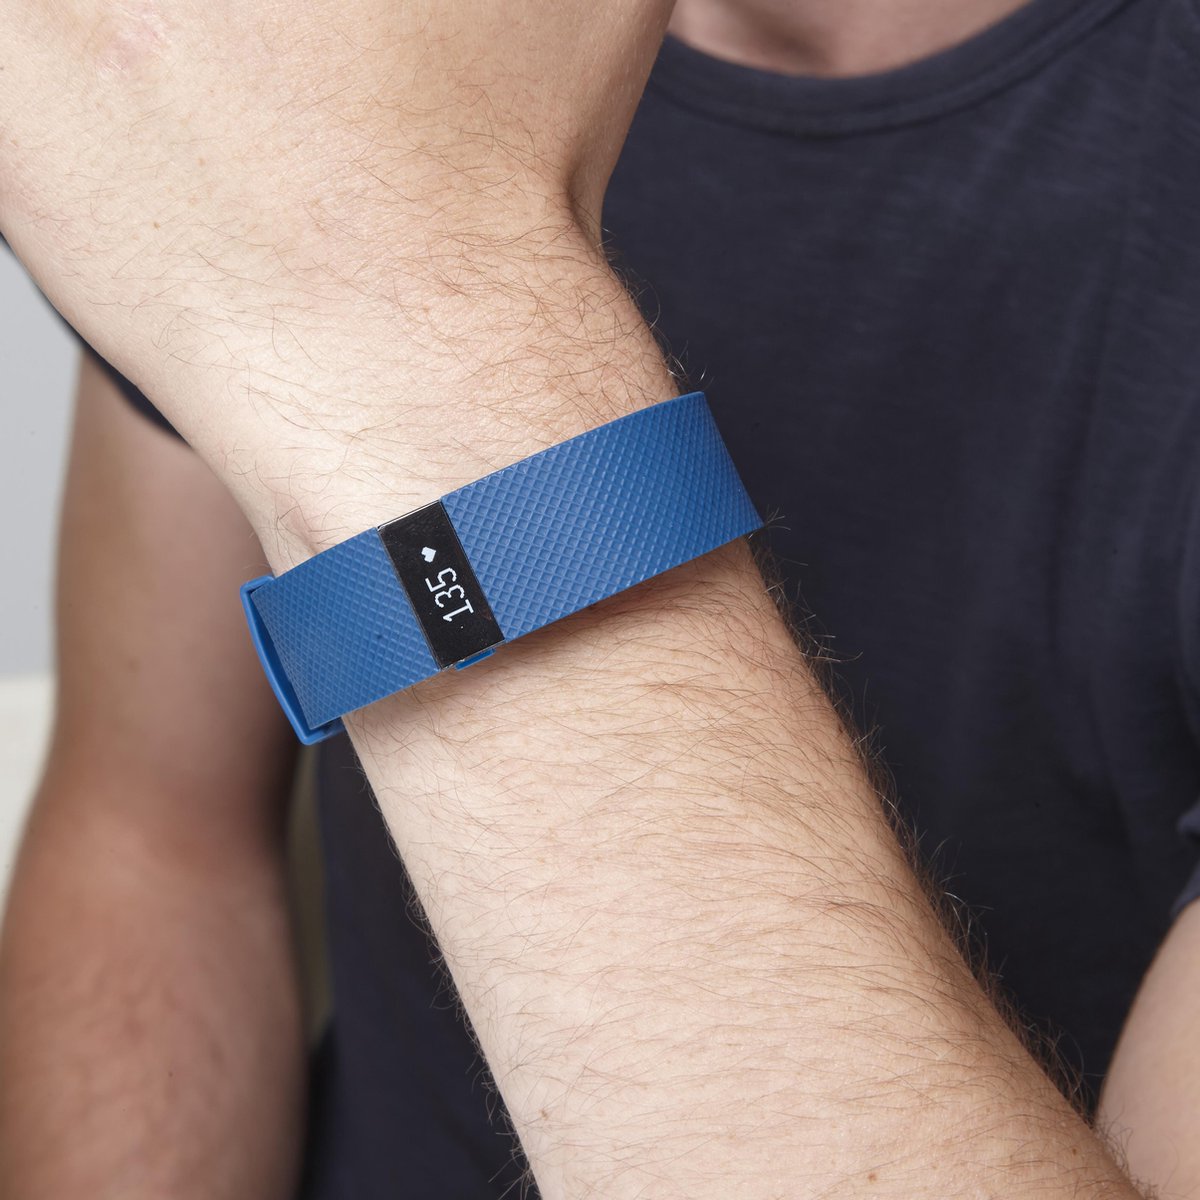 Michelangelo regering Supermarkt Fitbit Charge HR Activity Tracker - Blauw - Small | bol.com